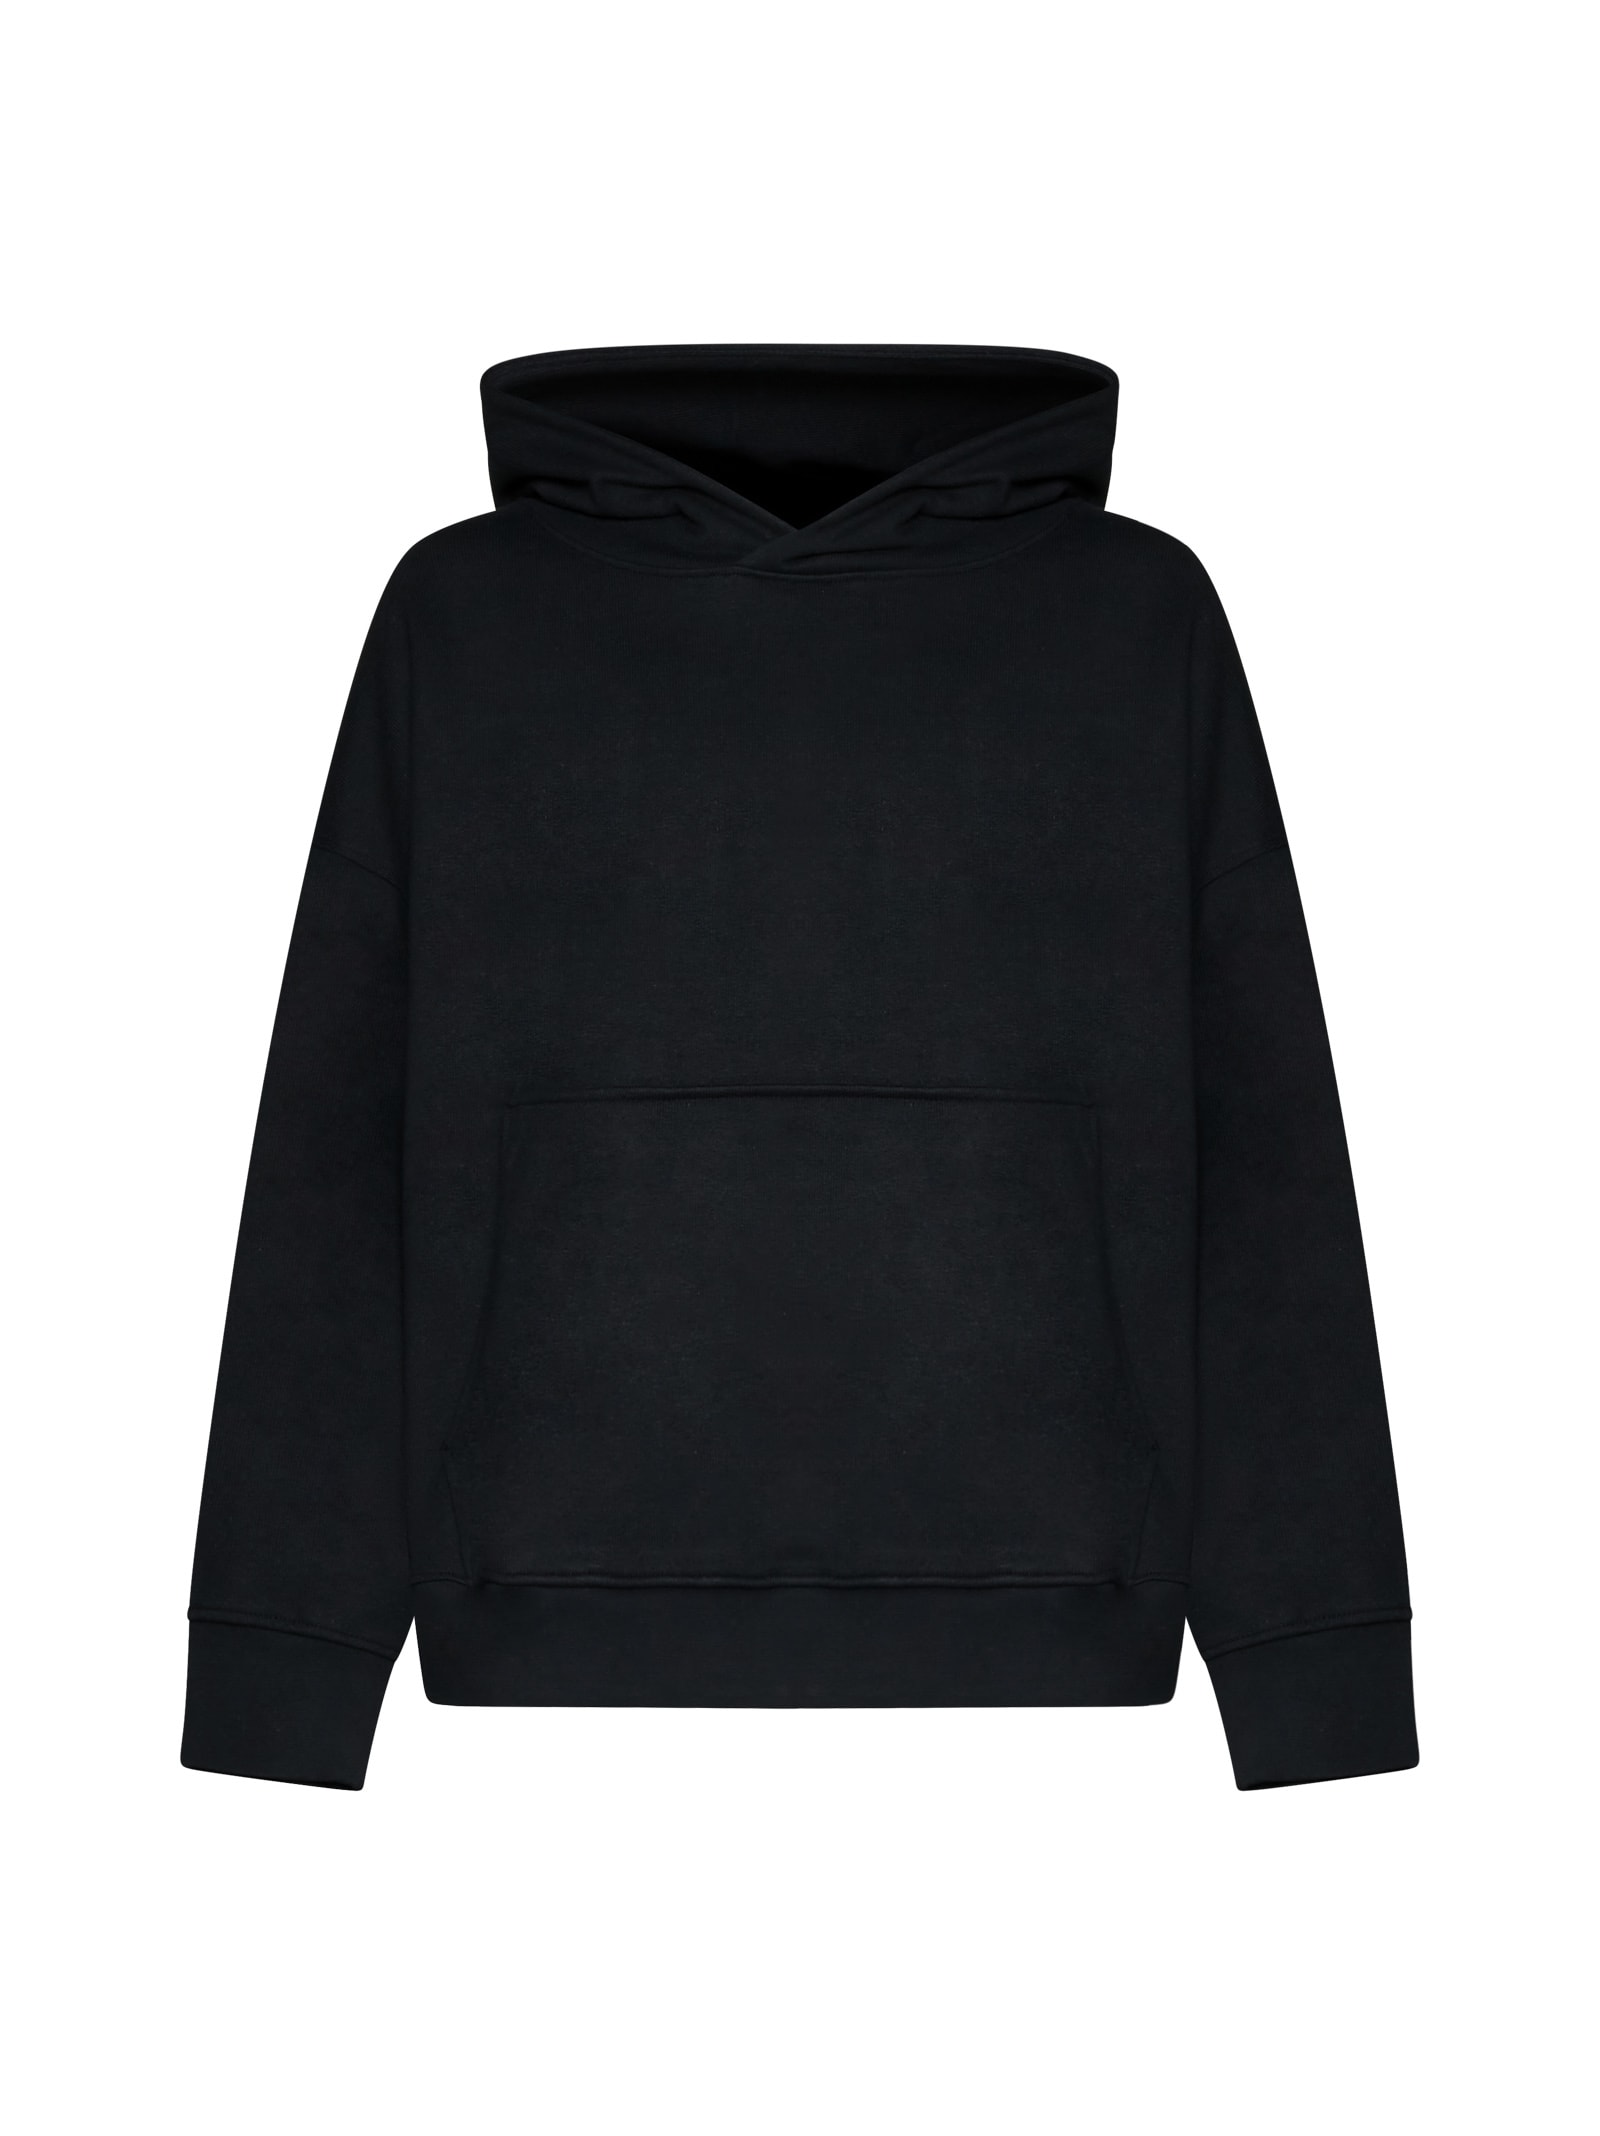 Shop A Paper Kid Sweater In Black